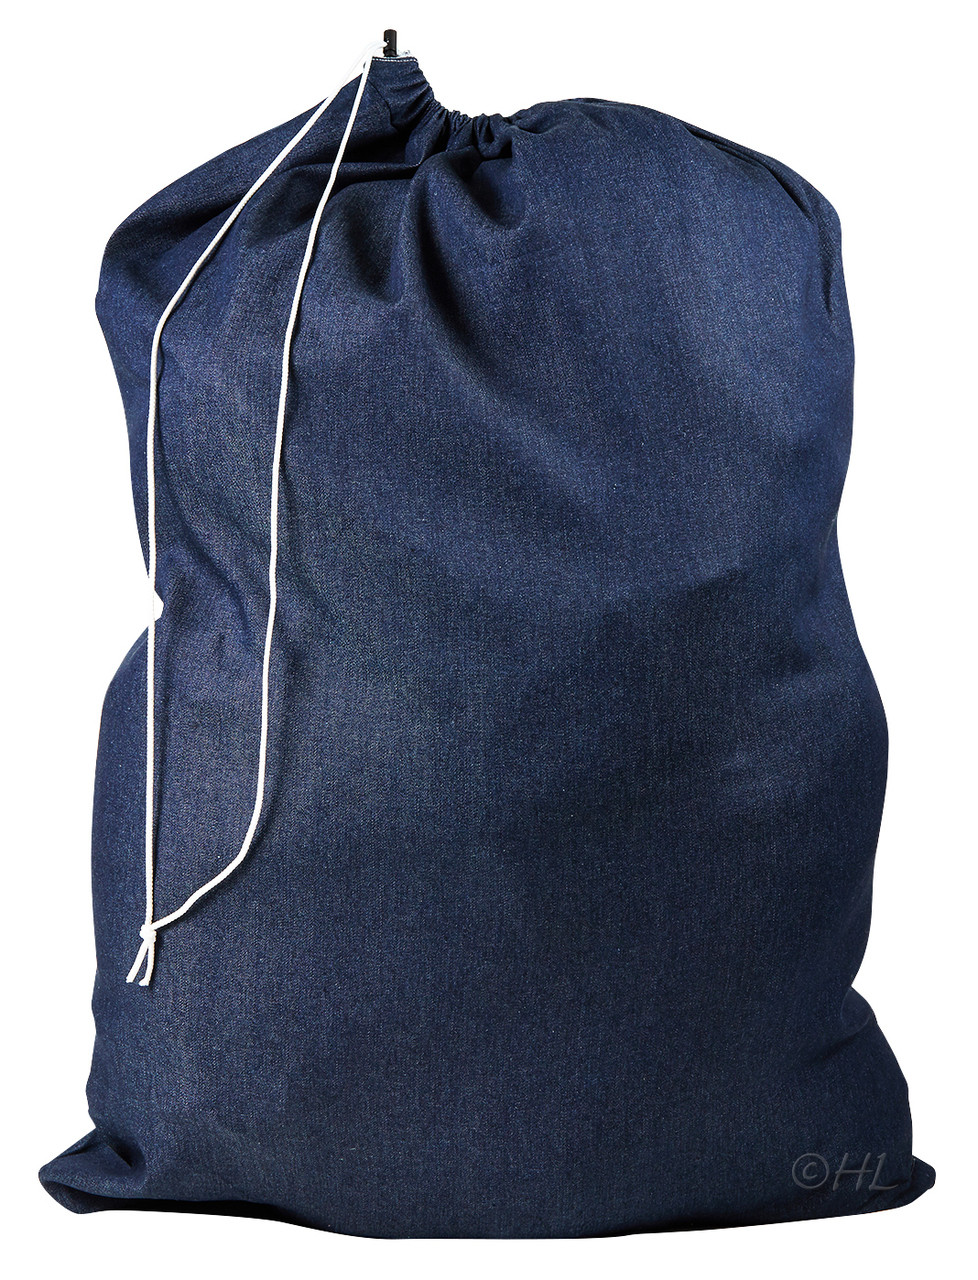 Jumbo Heavy Duty Extra Large Nylon Laundry Bag Locking Drawstring Closure 30x40 